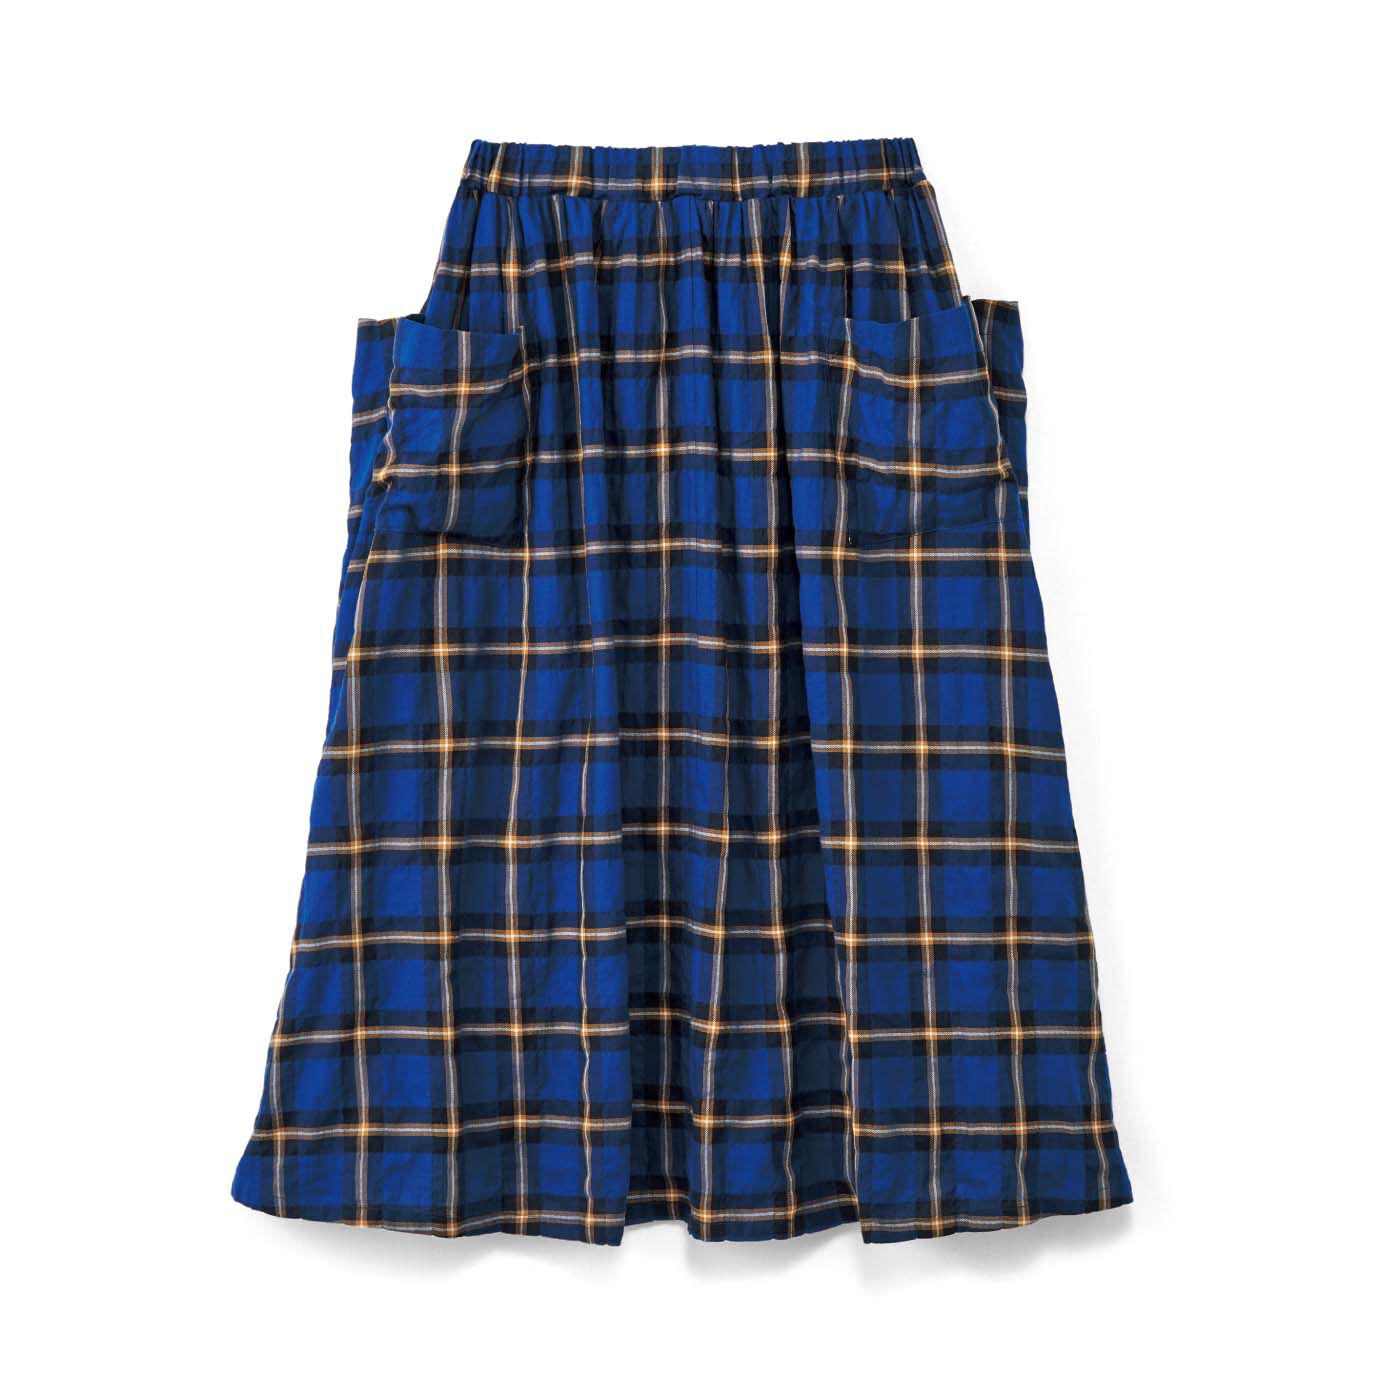 Real Stock|el:ment　ヘリンボーンチェックの播州織生地が魅力 マルチポケットロングスカート|大きめの仕切りポケットが左右に4つ。